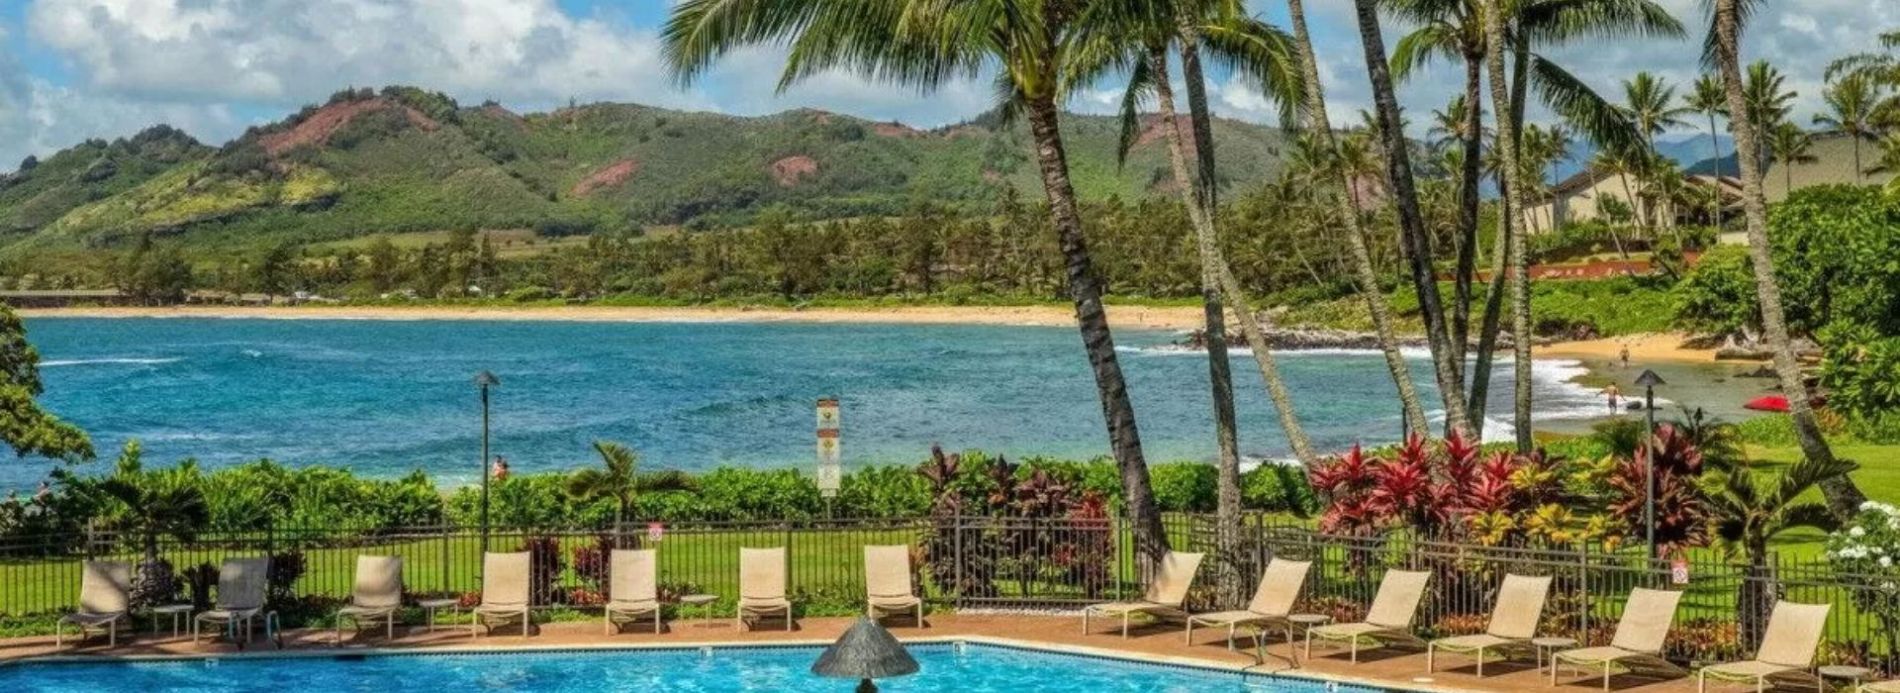 Kauai resort with oceanfront pool